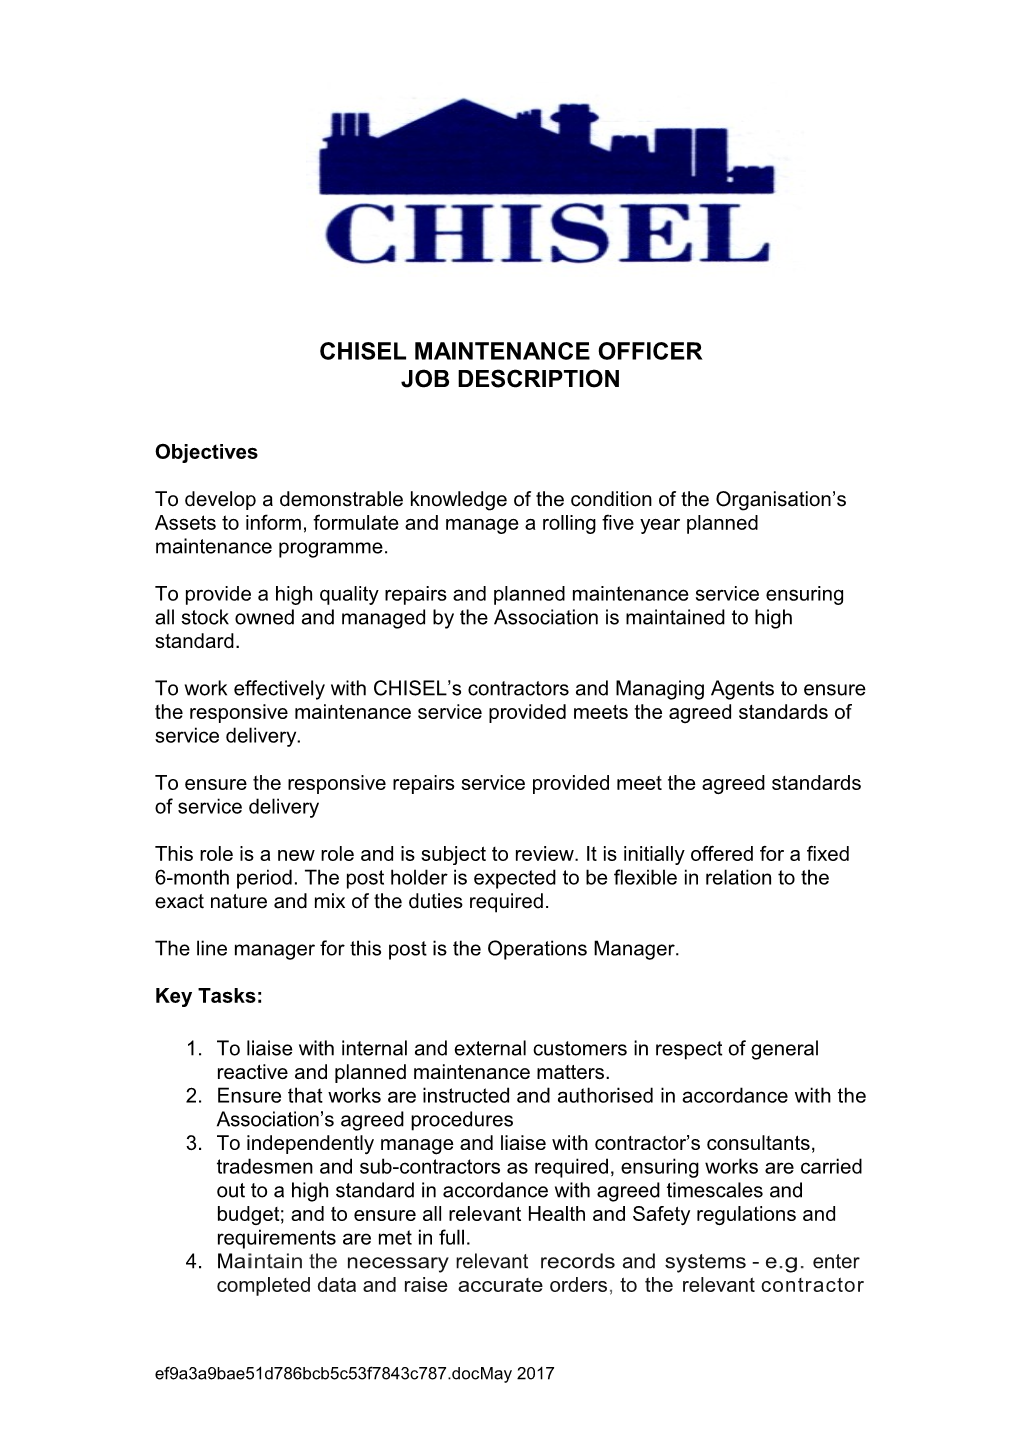 Chisel Maintenance Officer